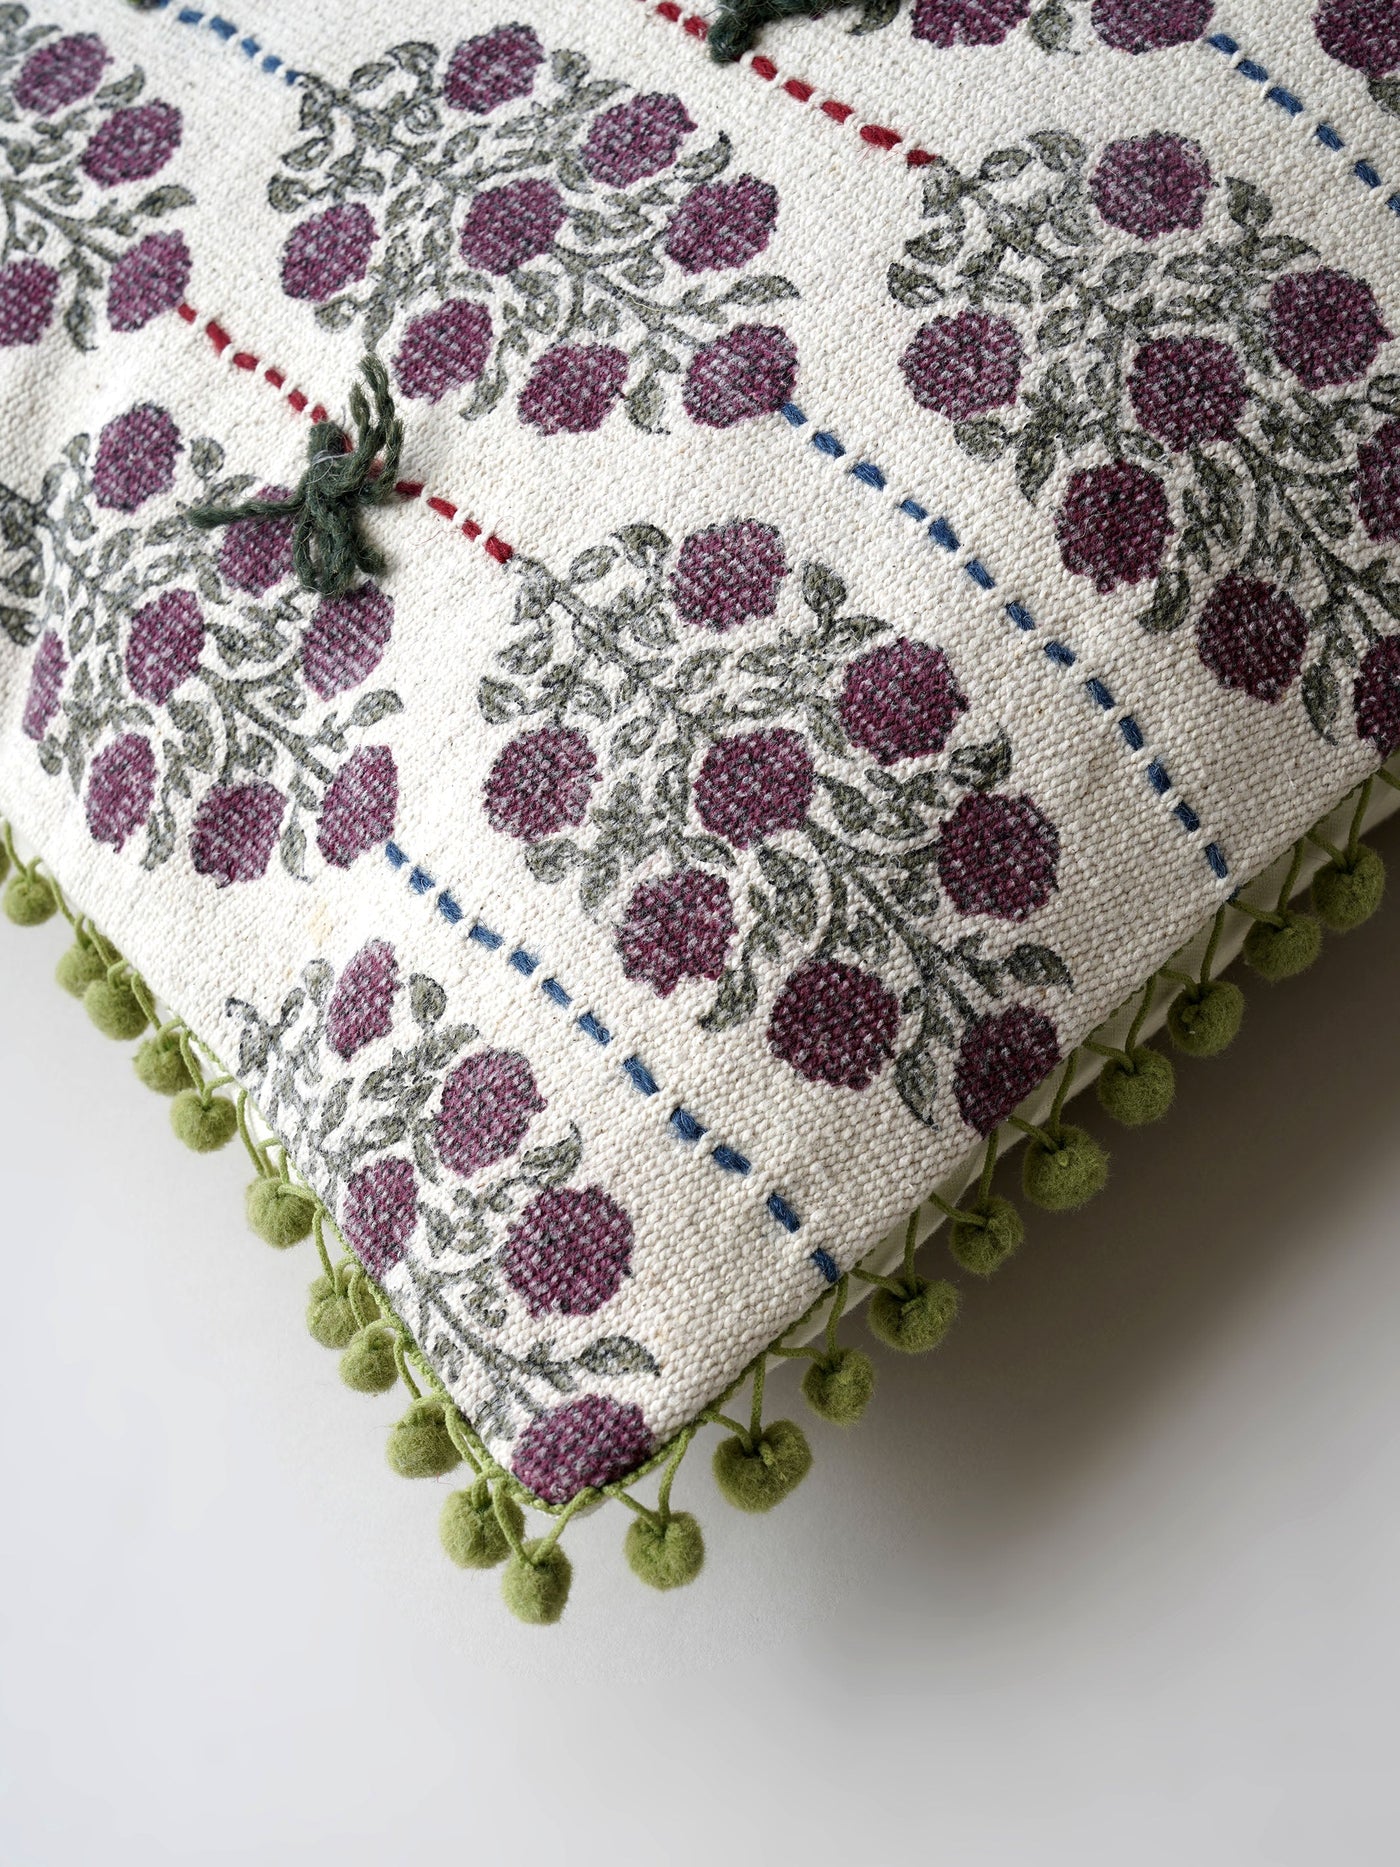 Cushion Cover - Pommed Anguri Block Print